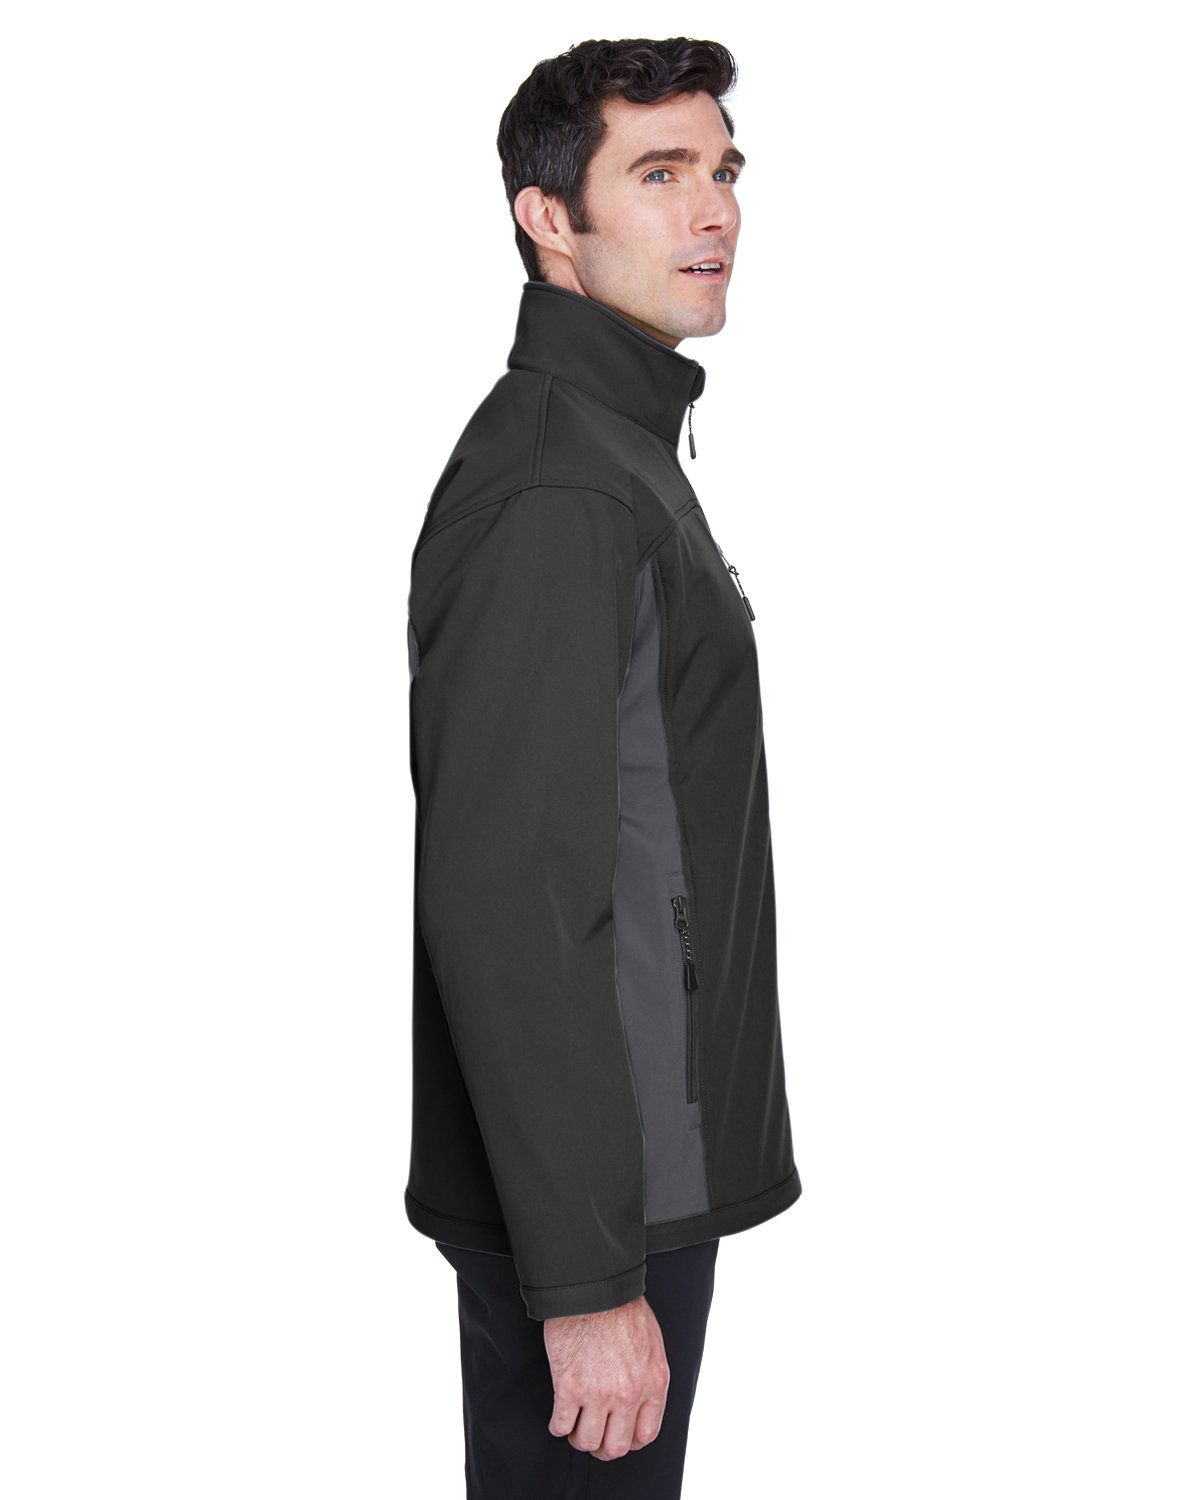 'Devon & Jones D997 Men's Soft Shell Colorblock Jacket'